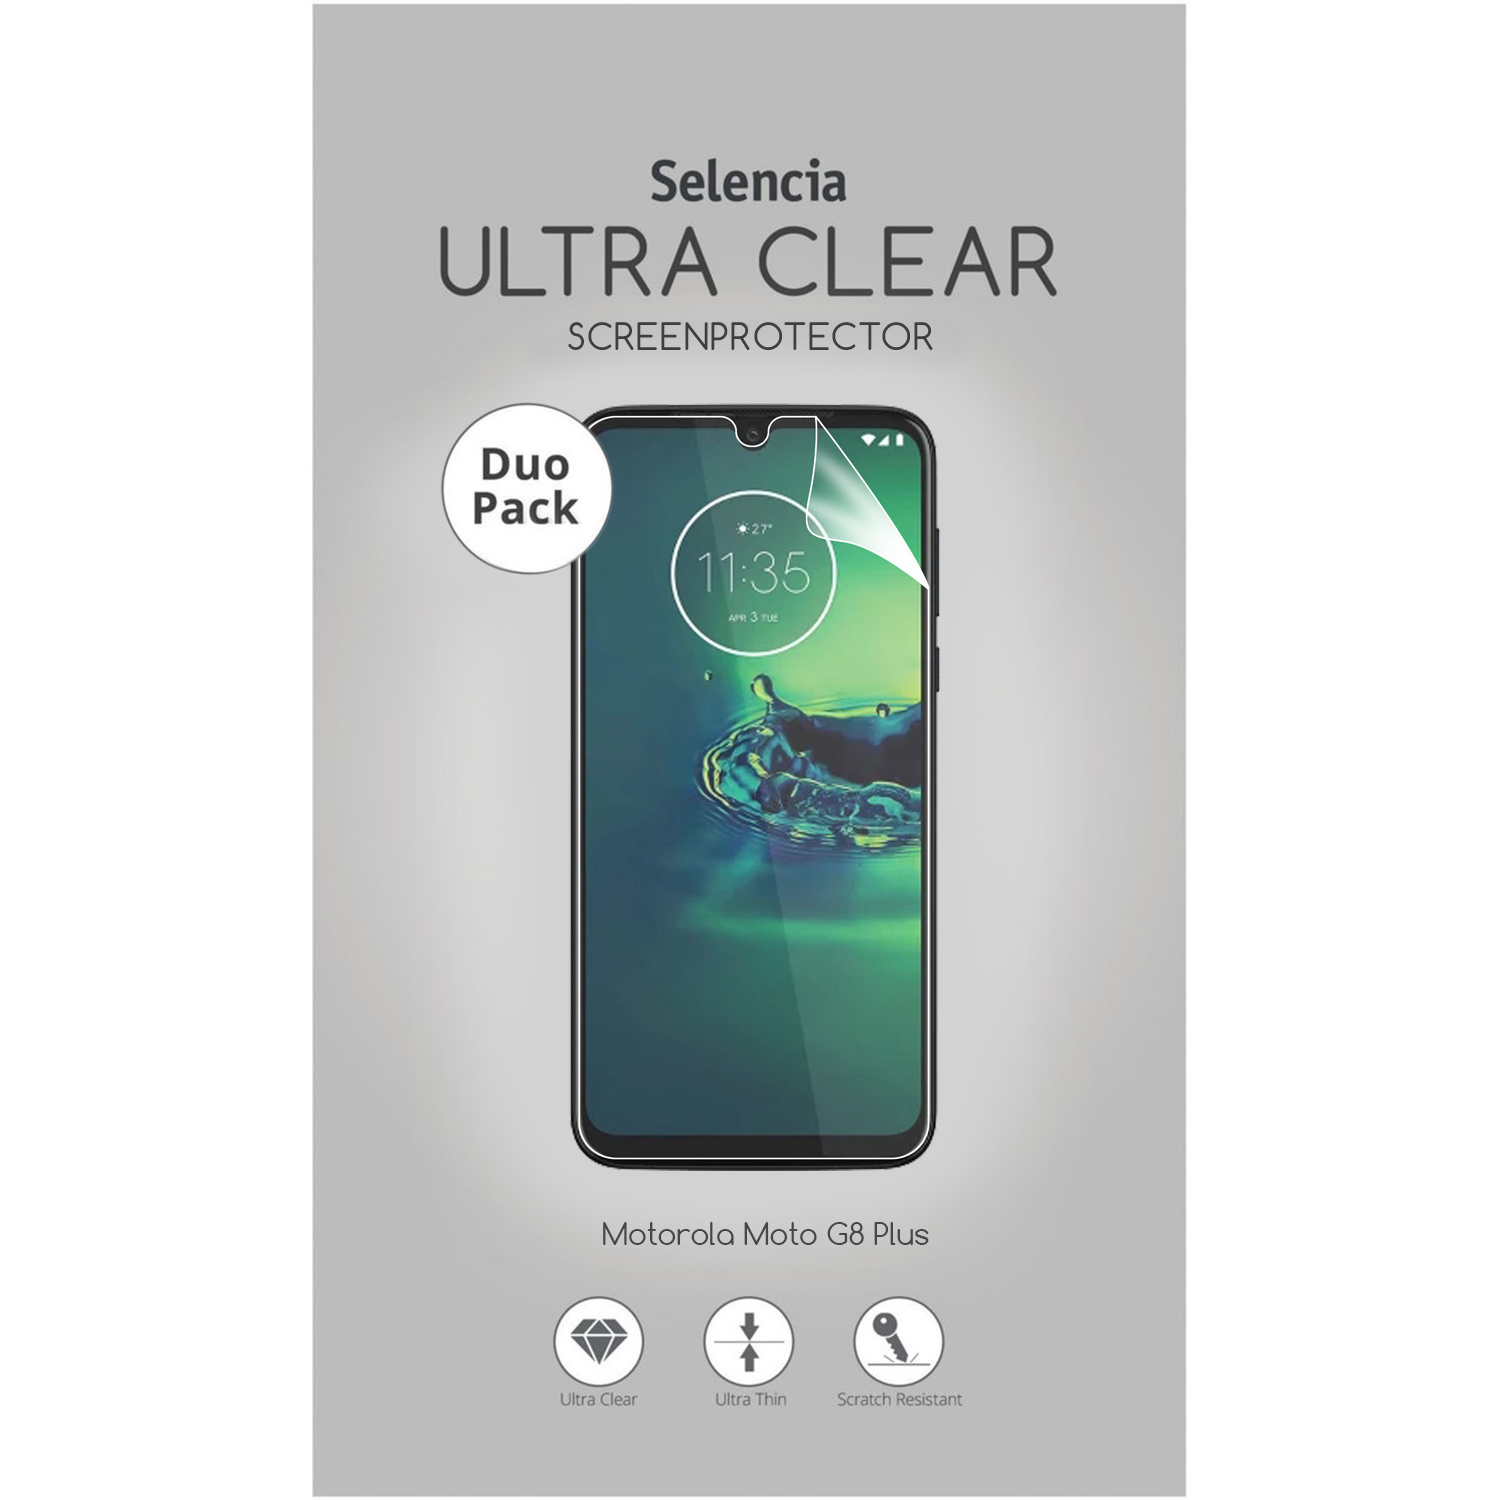 Selencia Pack Ultra Clear Screenprotector voor de Motorola Moto G8 Plus